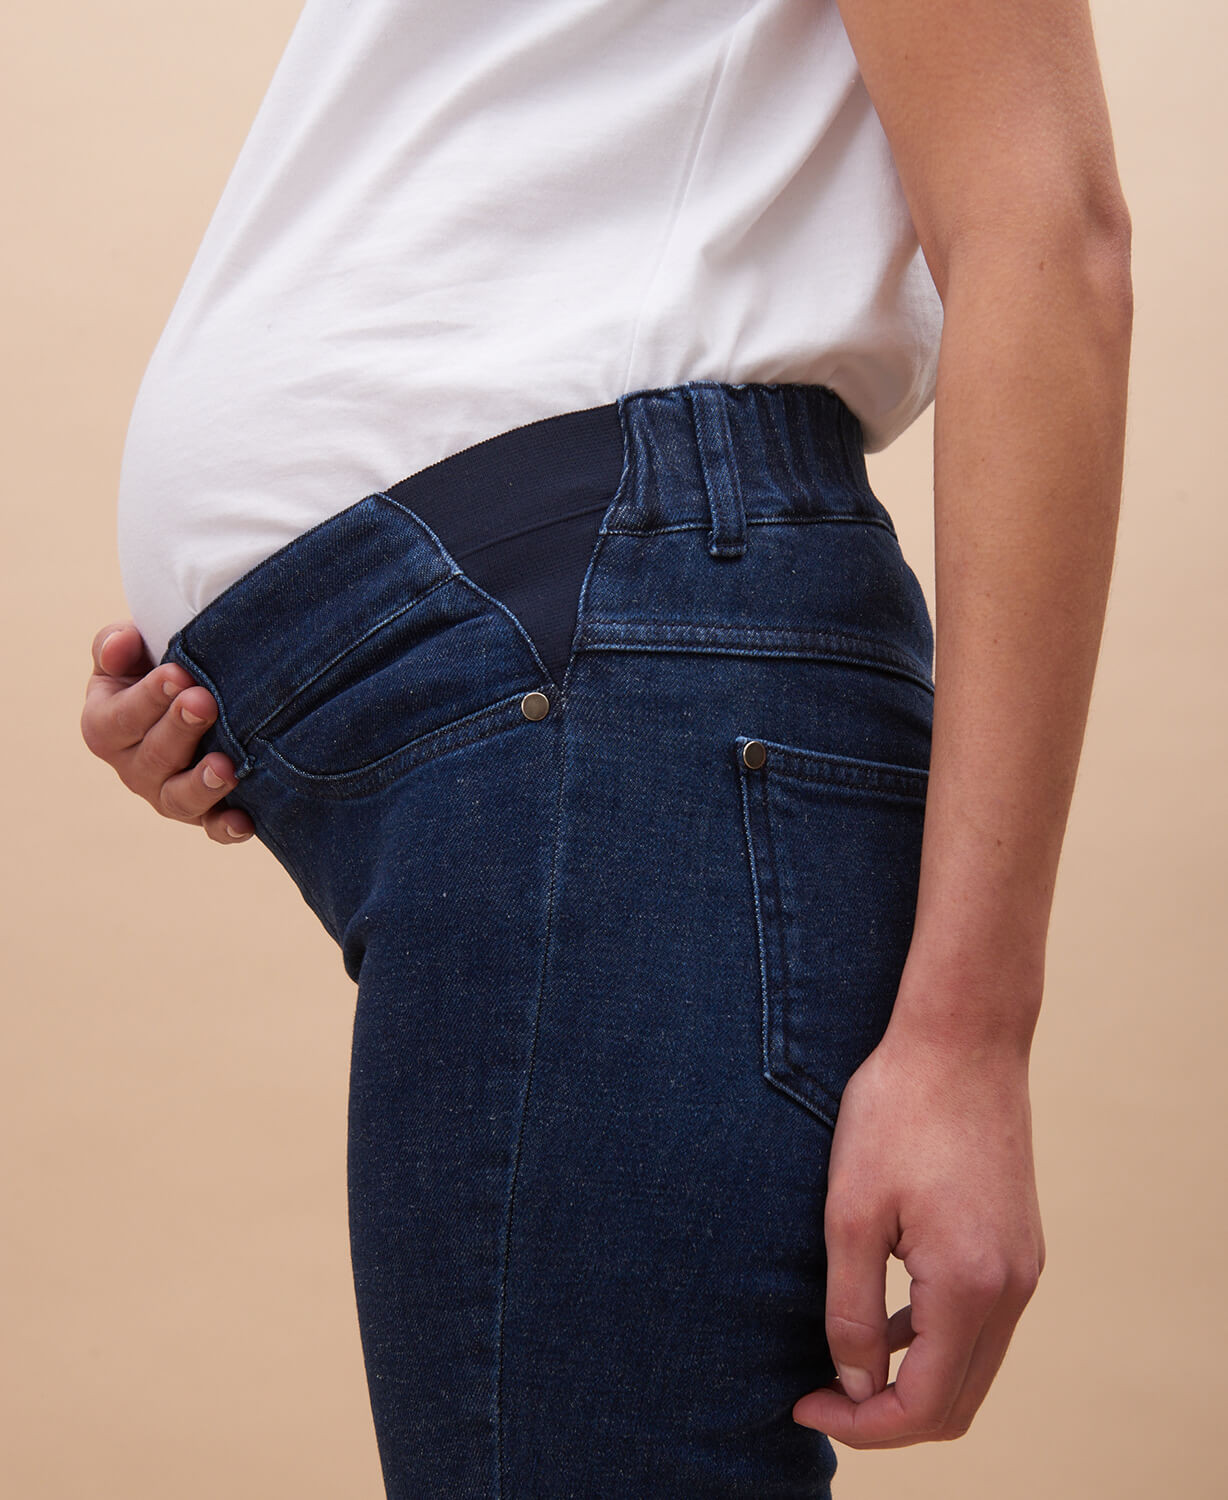 Julie Over the Bump Skinny Maternity Denim Jeans Black